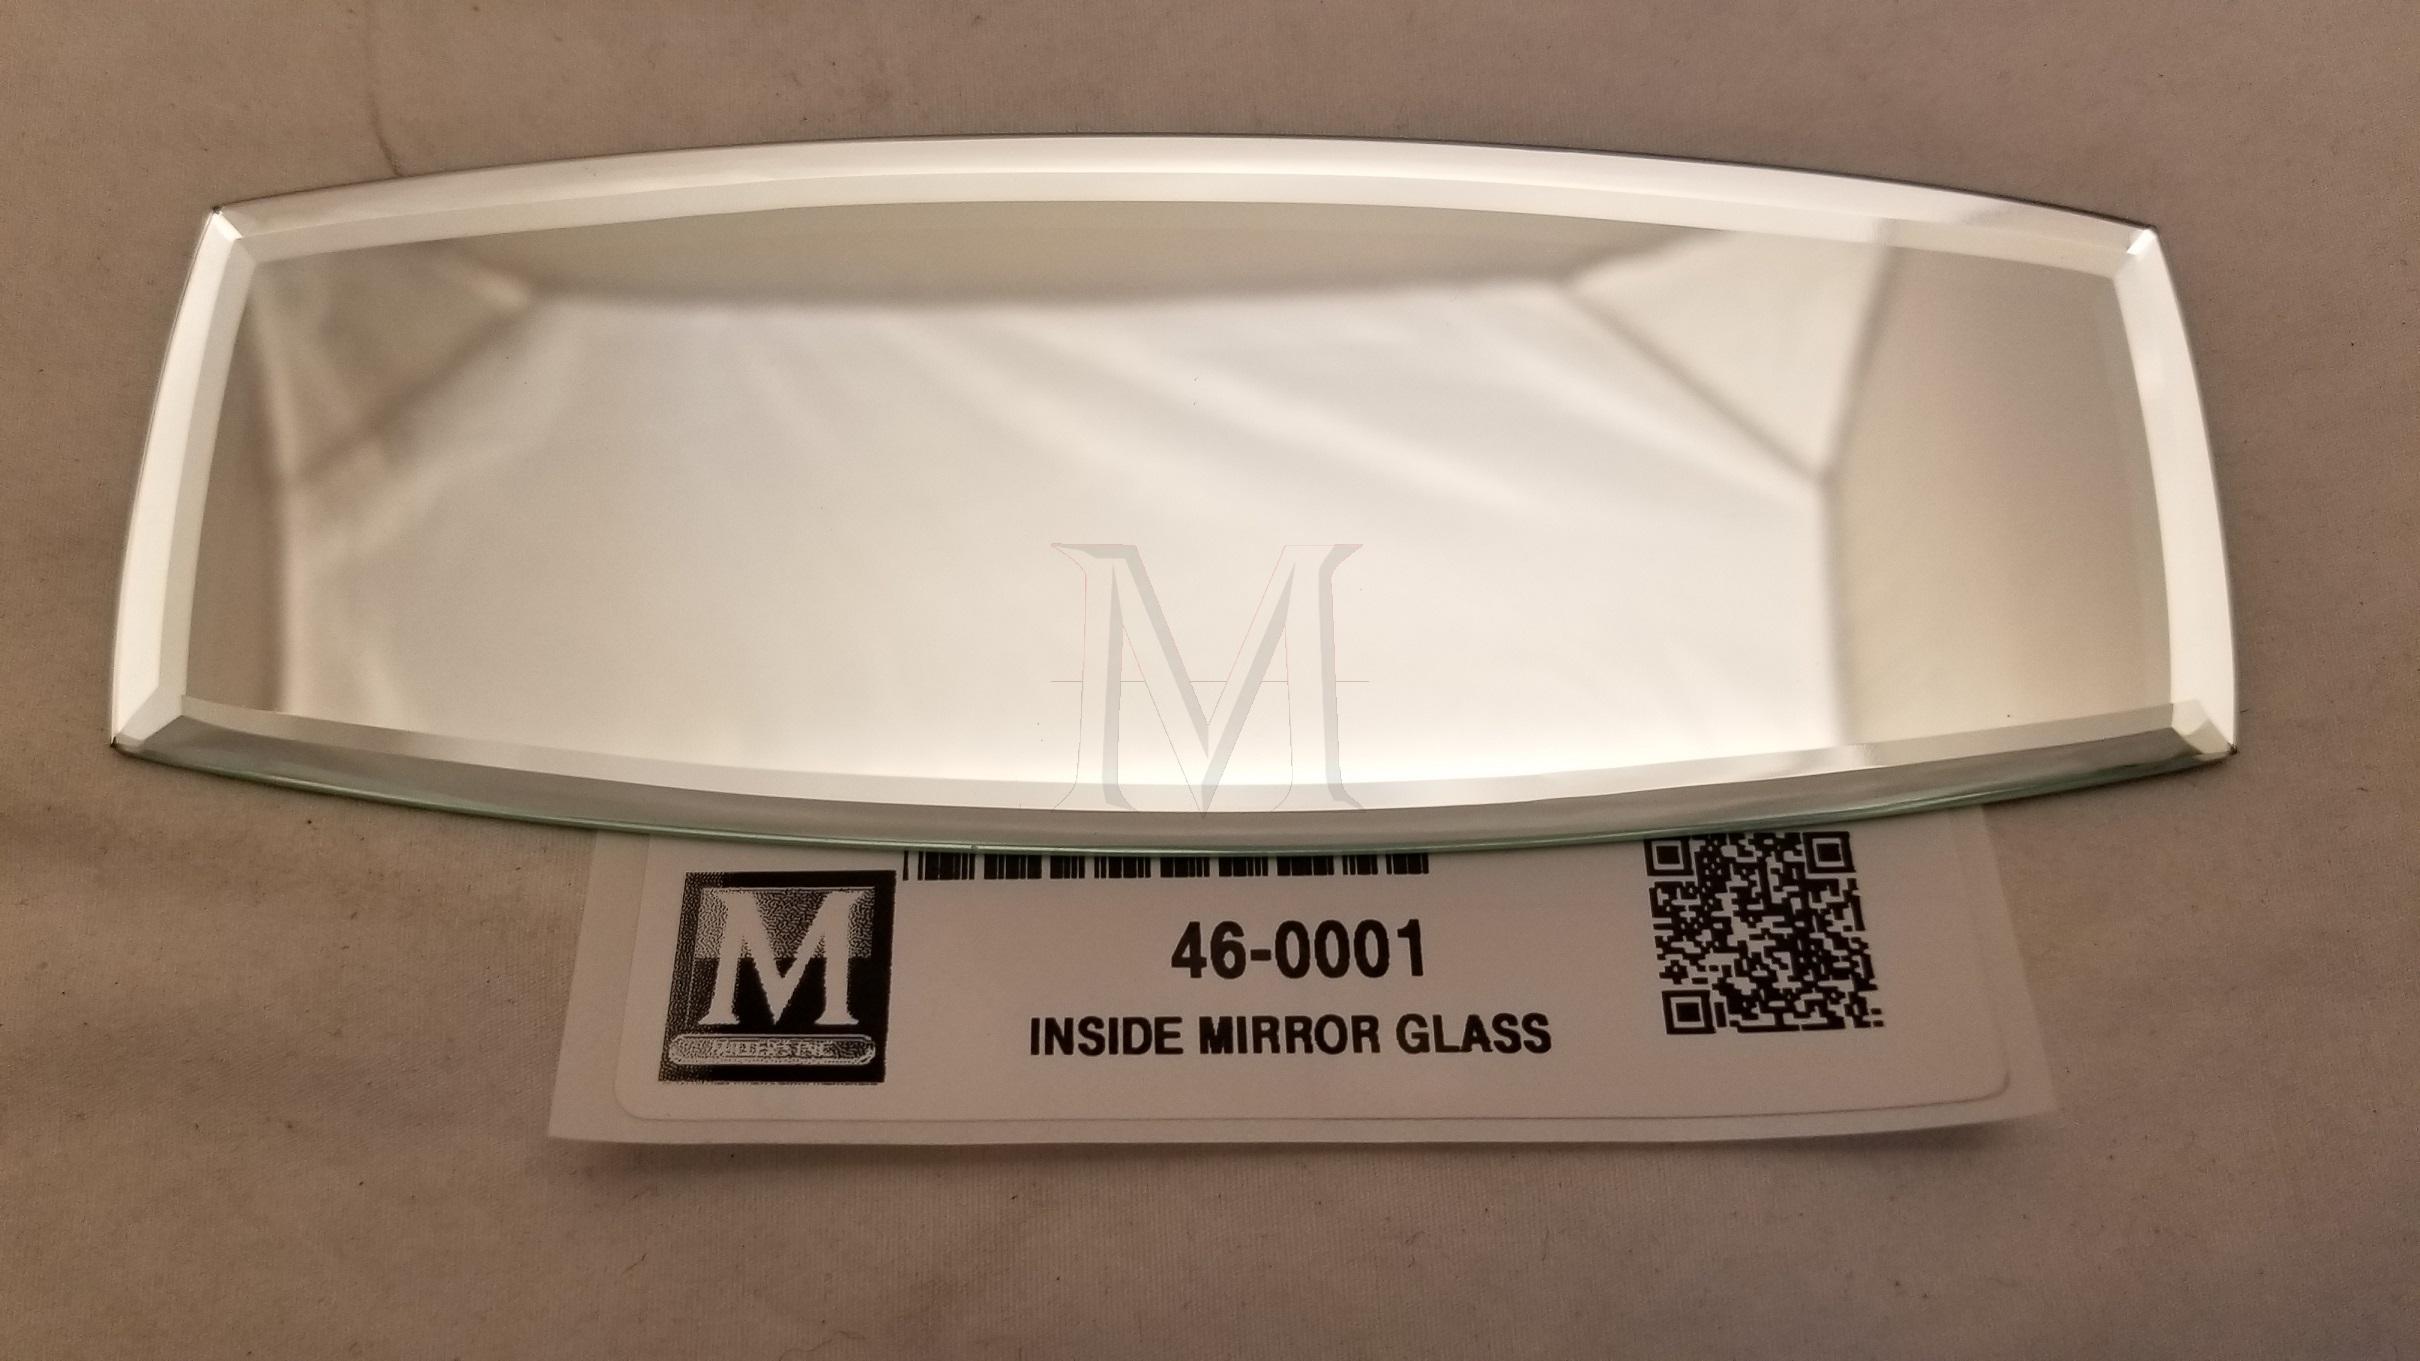 INSIDE MIRROR GLASS